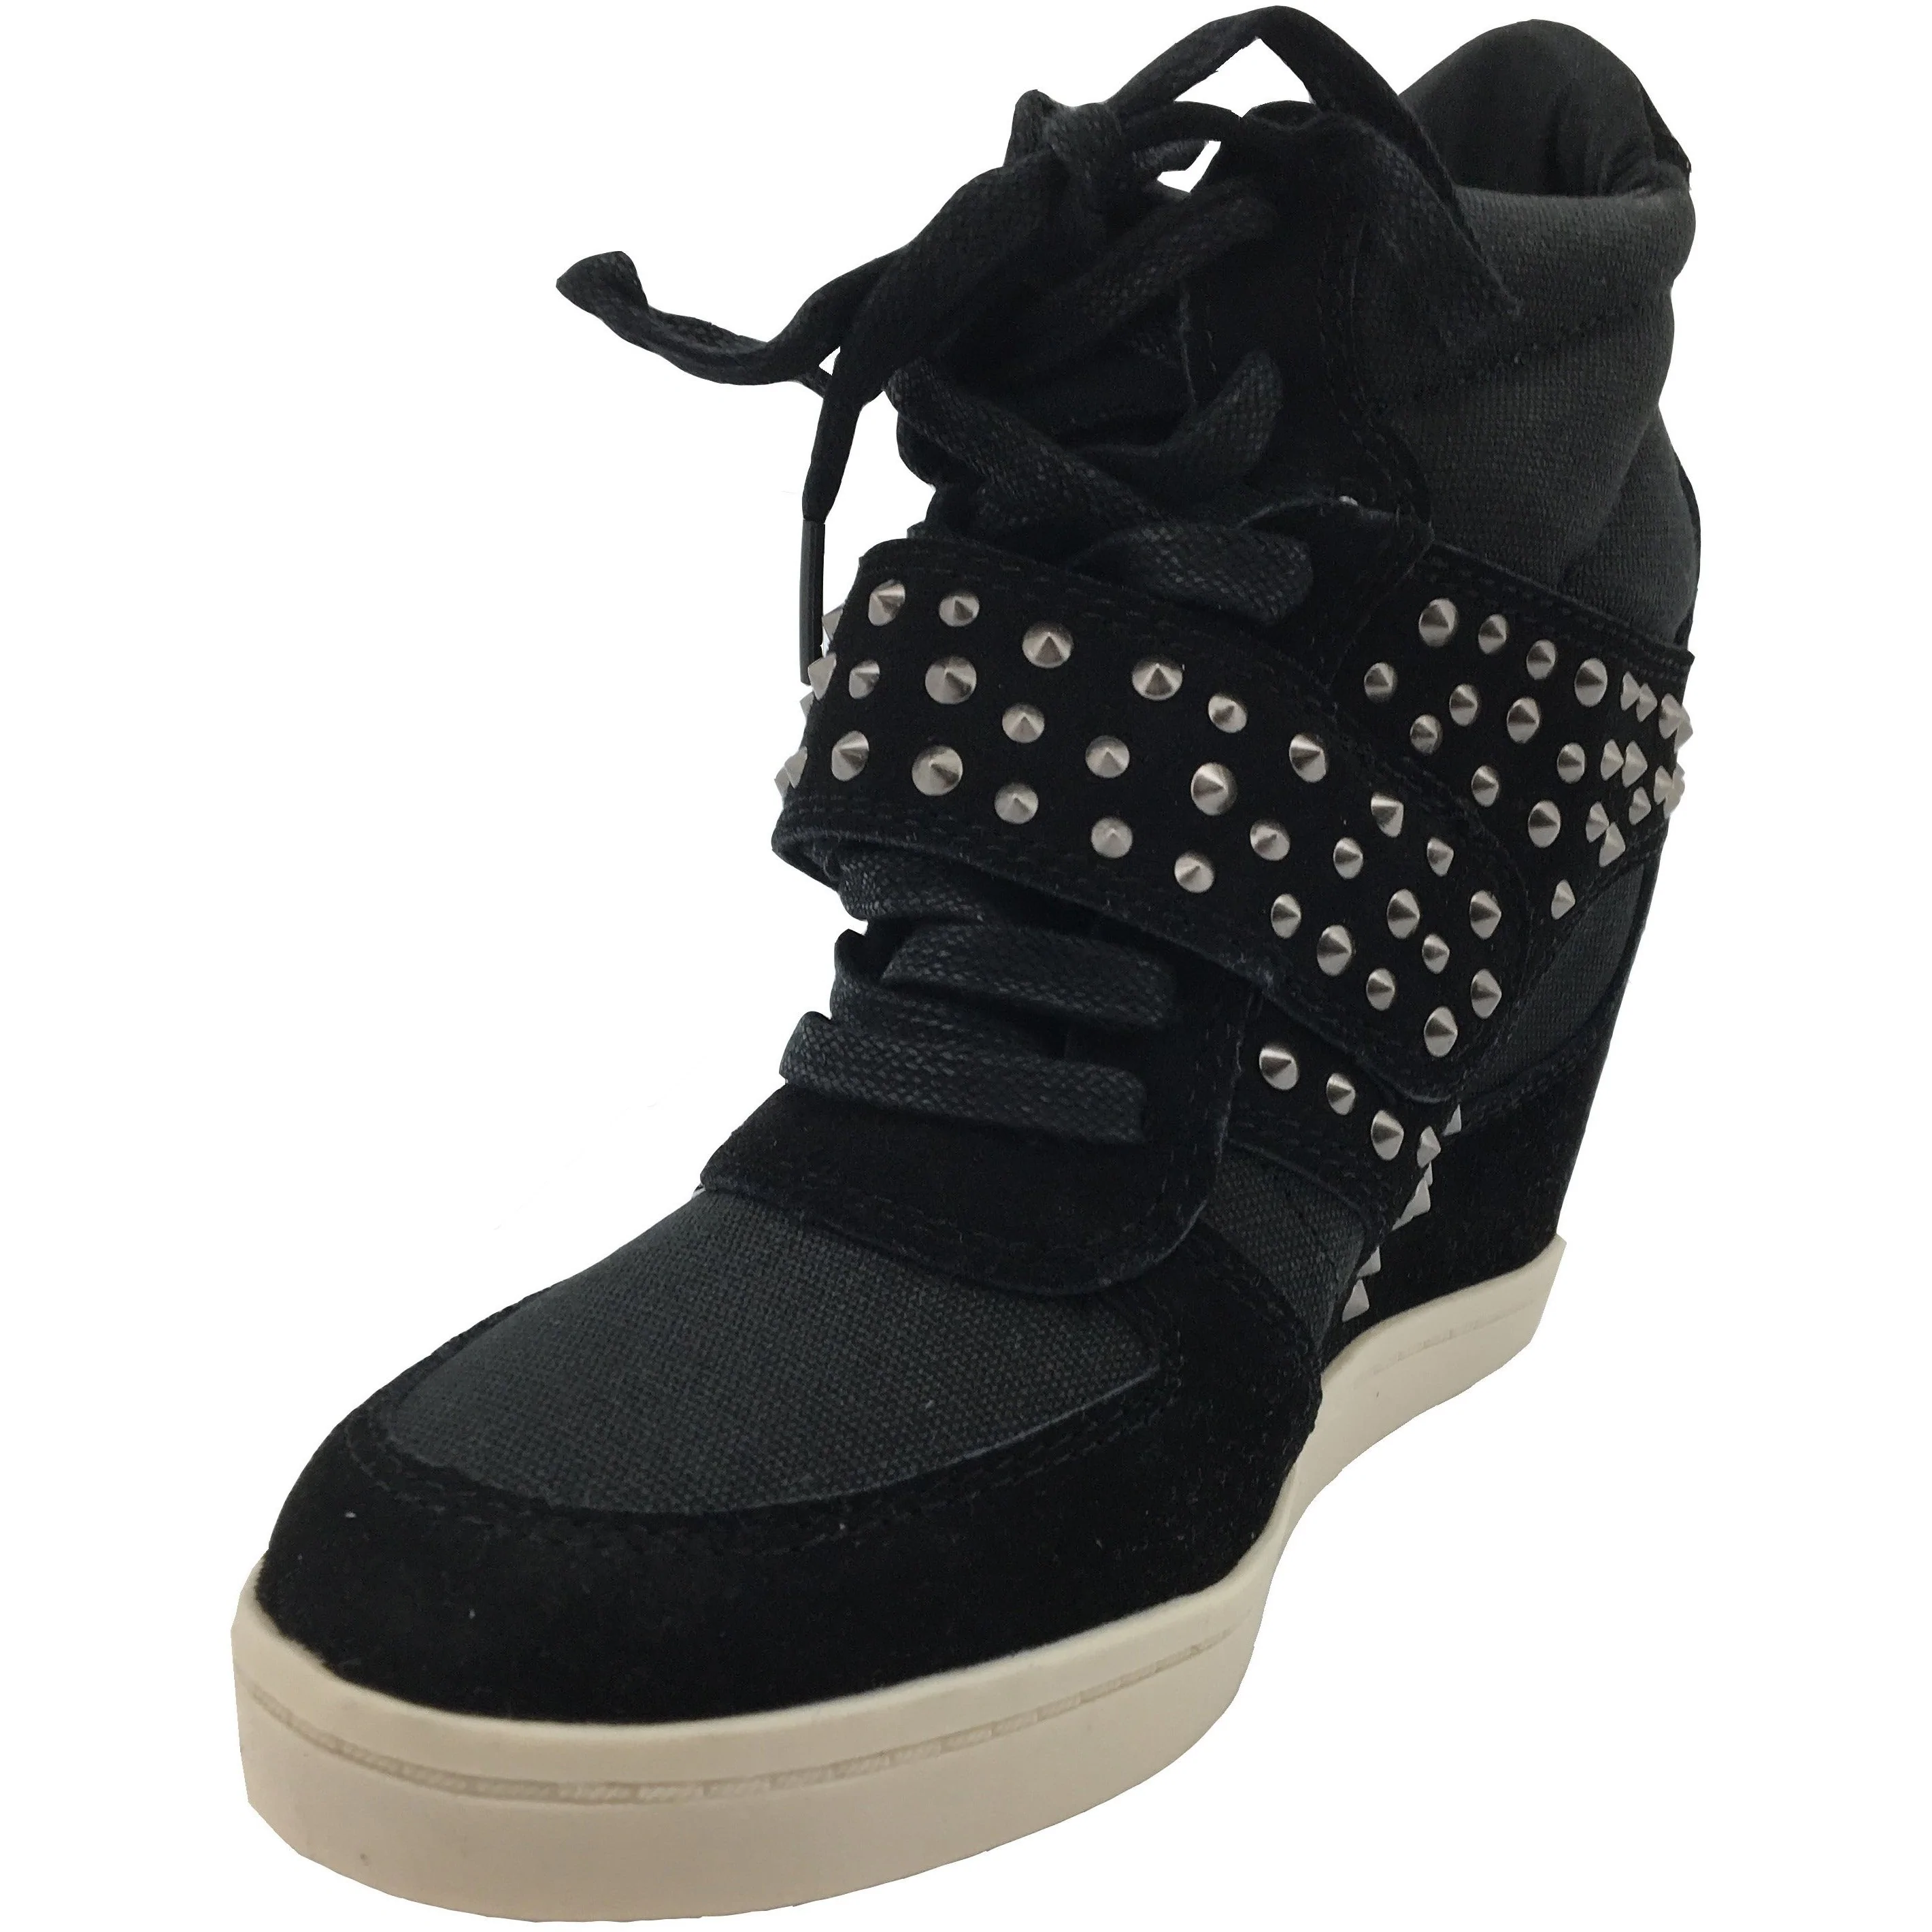 Zigi Soho Women's Studded Wedge Heeled Shoe / Black / Fashion Sneaker